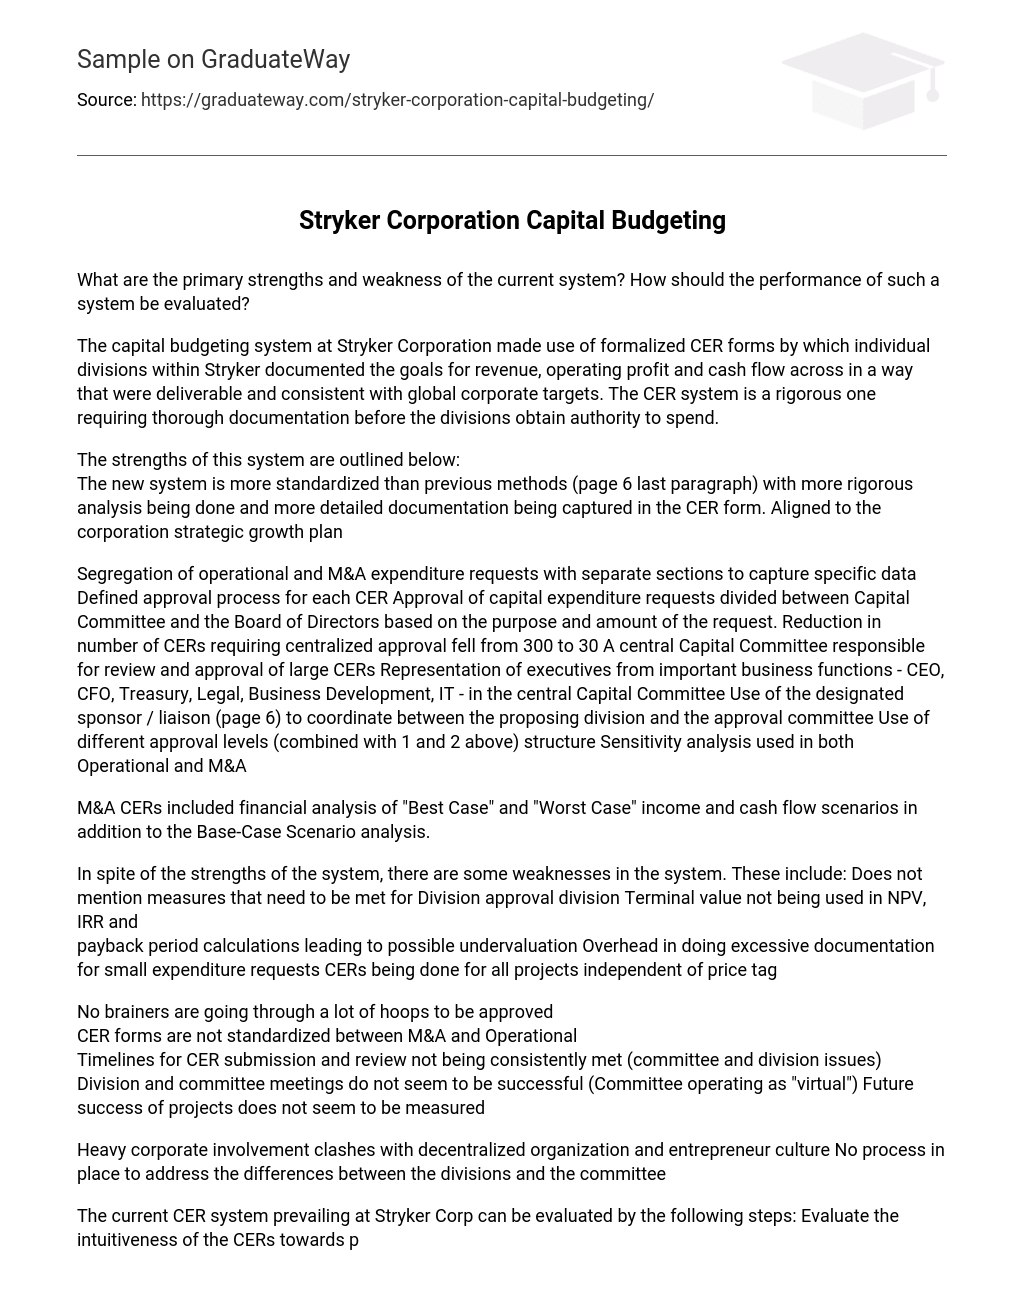 Stryker Corporation Capital Budgeting